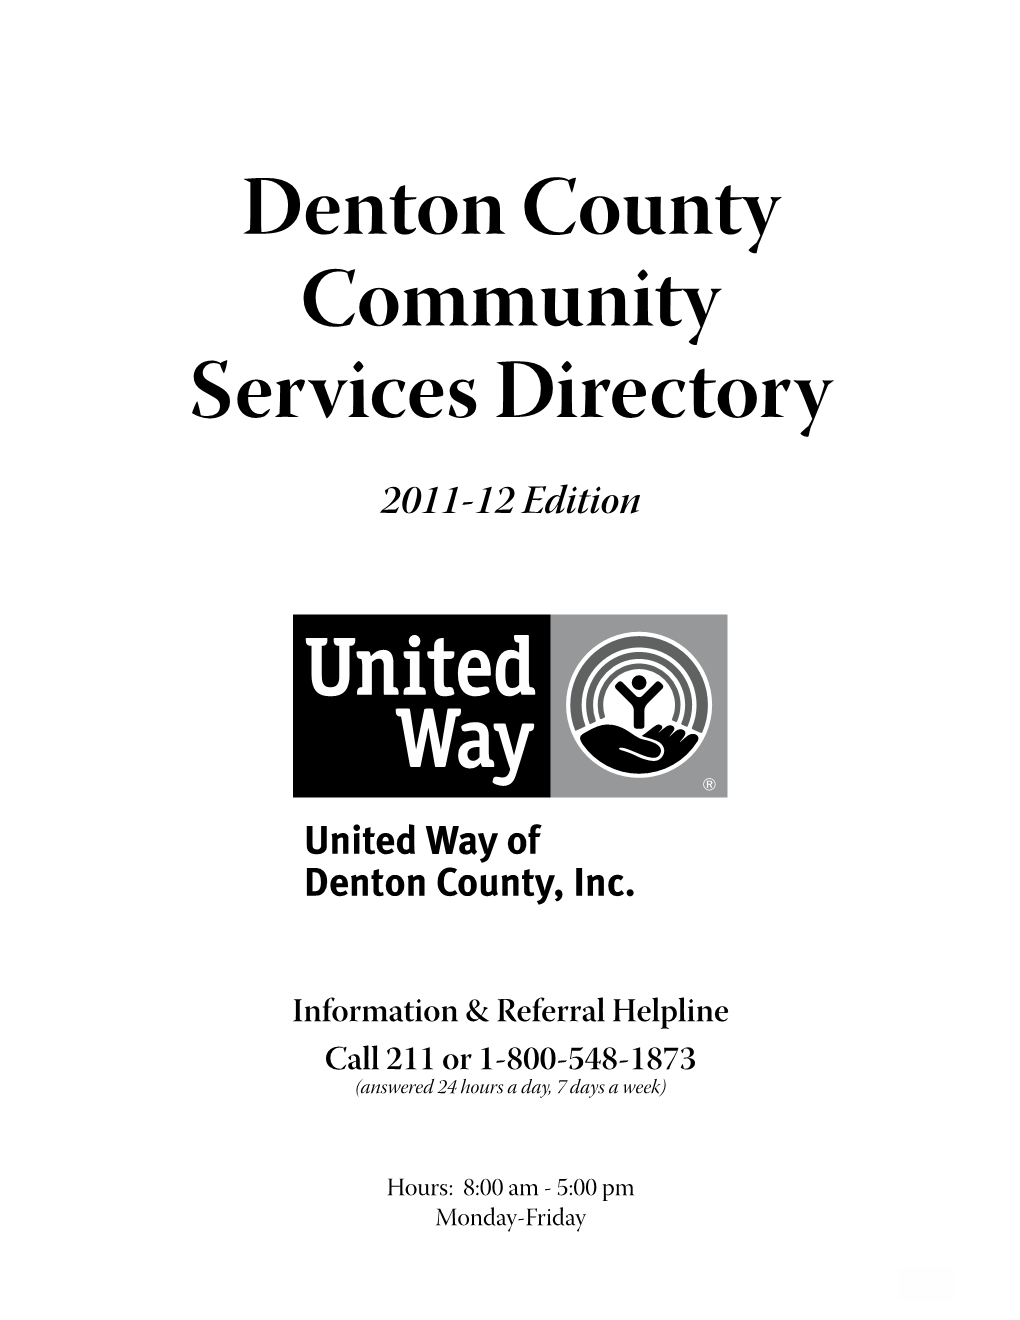 Denton County Community Services Directory 2011-12 Edition